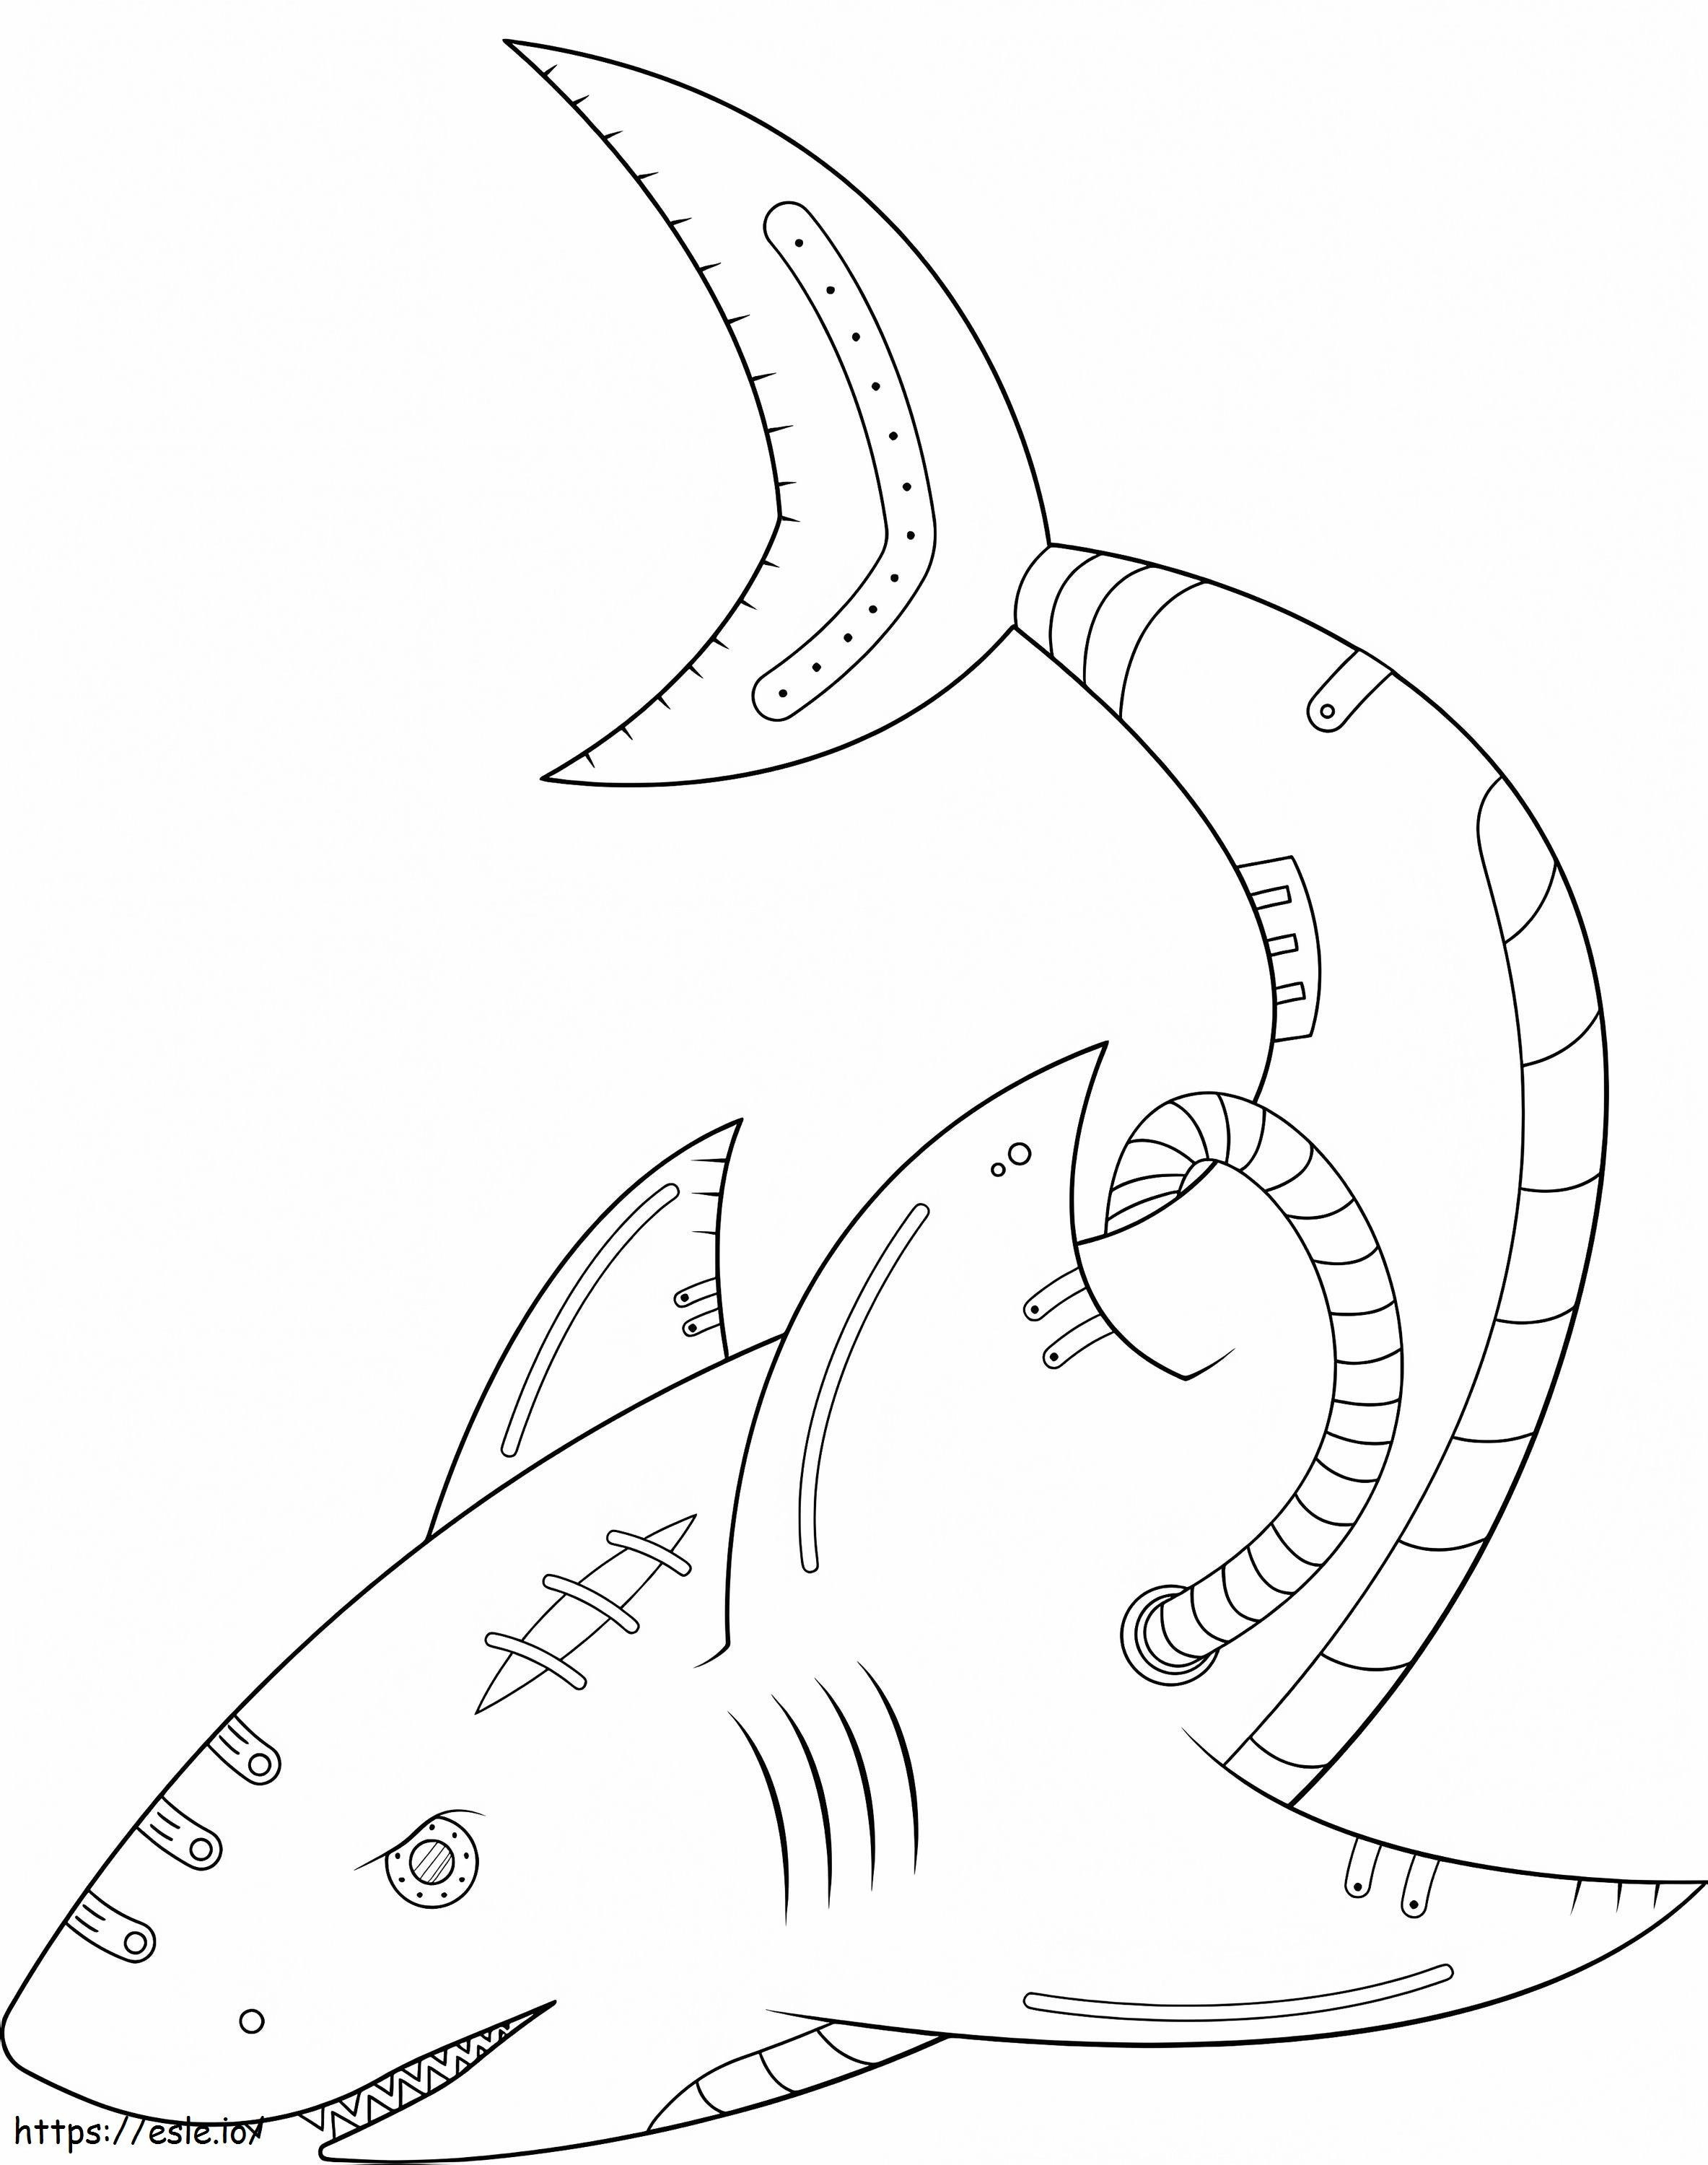 1597969012 Tubarão Steampunk para colorir